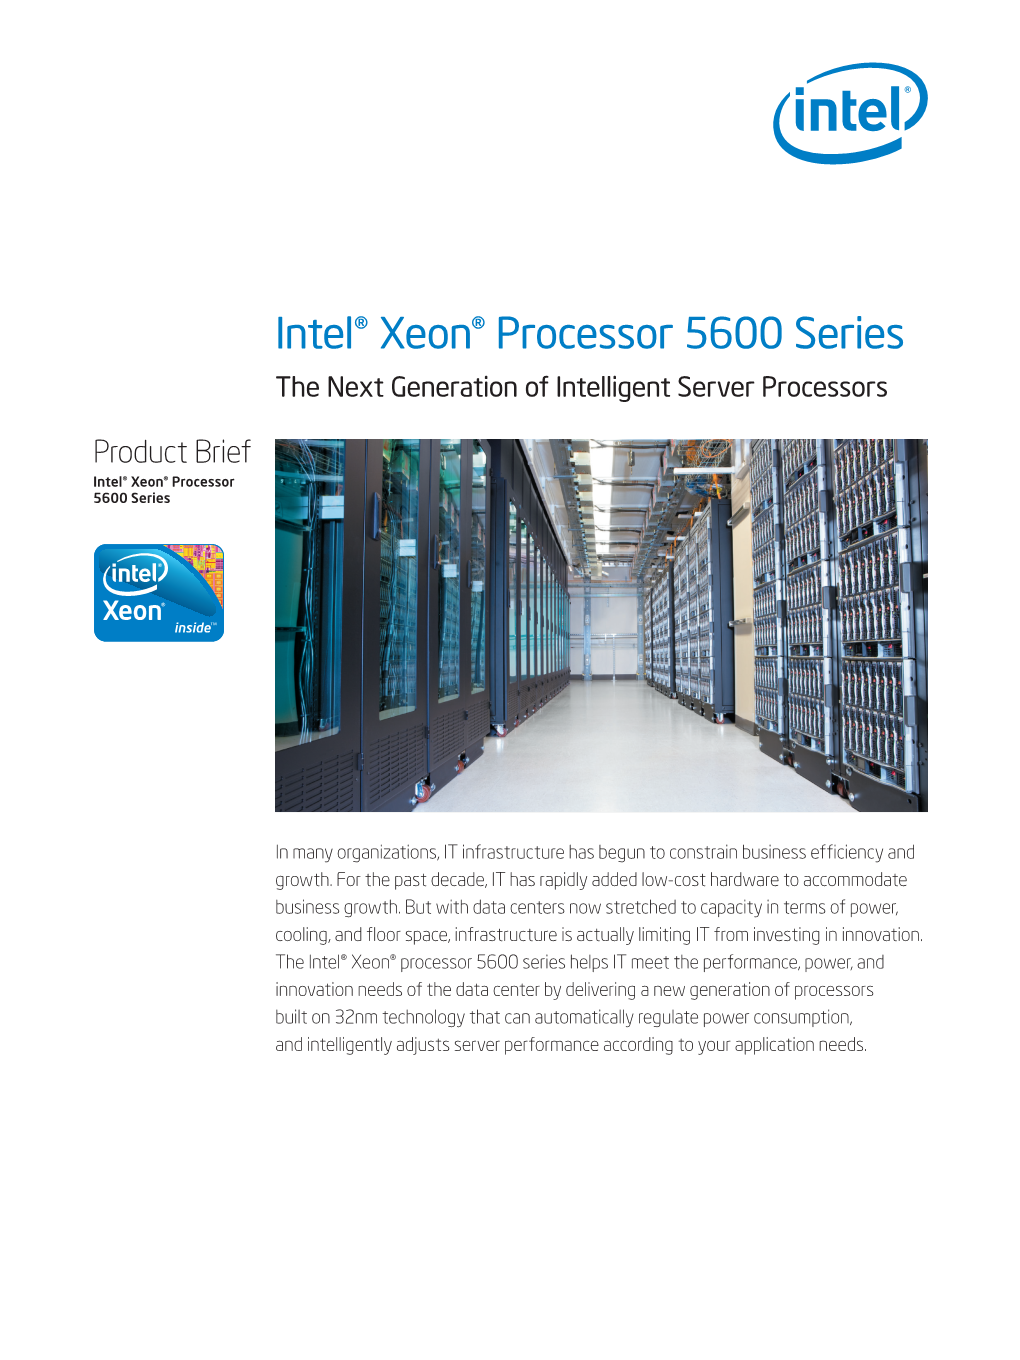 Intel Xeon Processor 5600 Series with Intel Microarchitec- Space